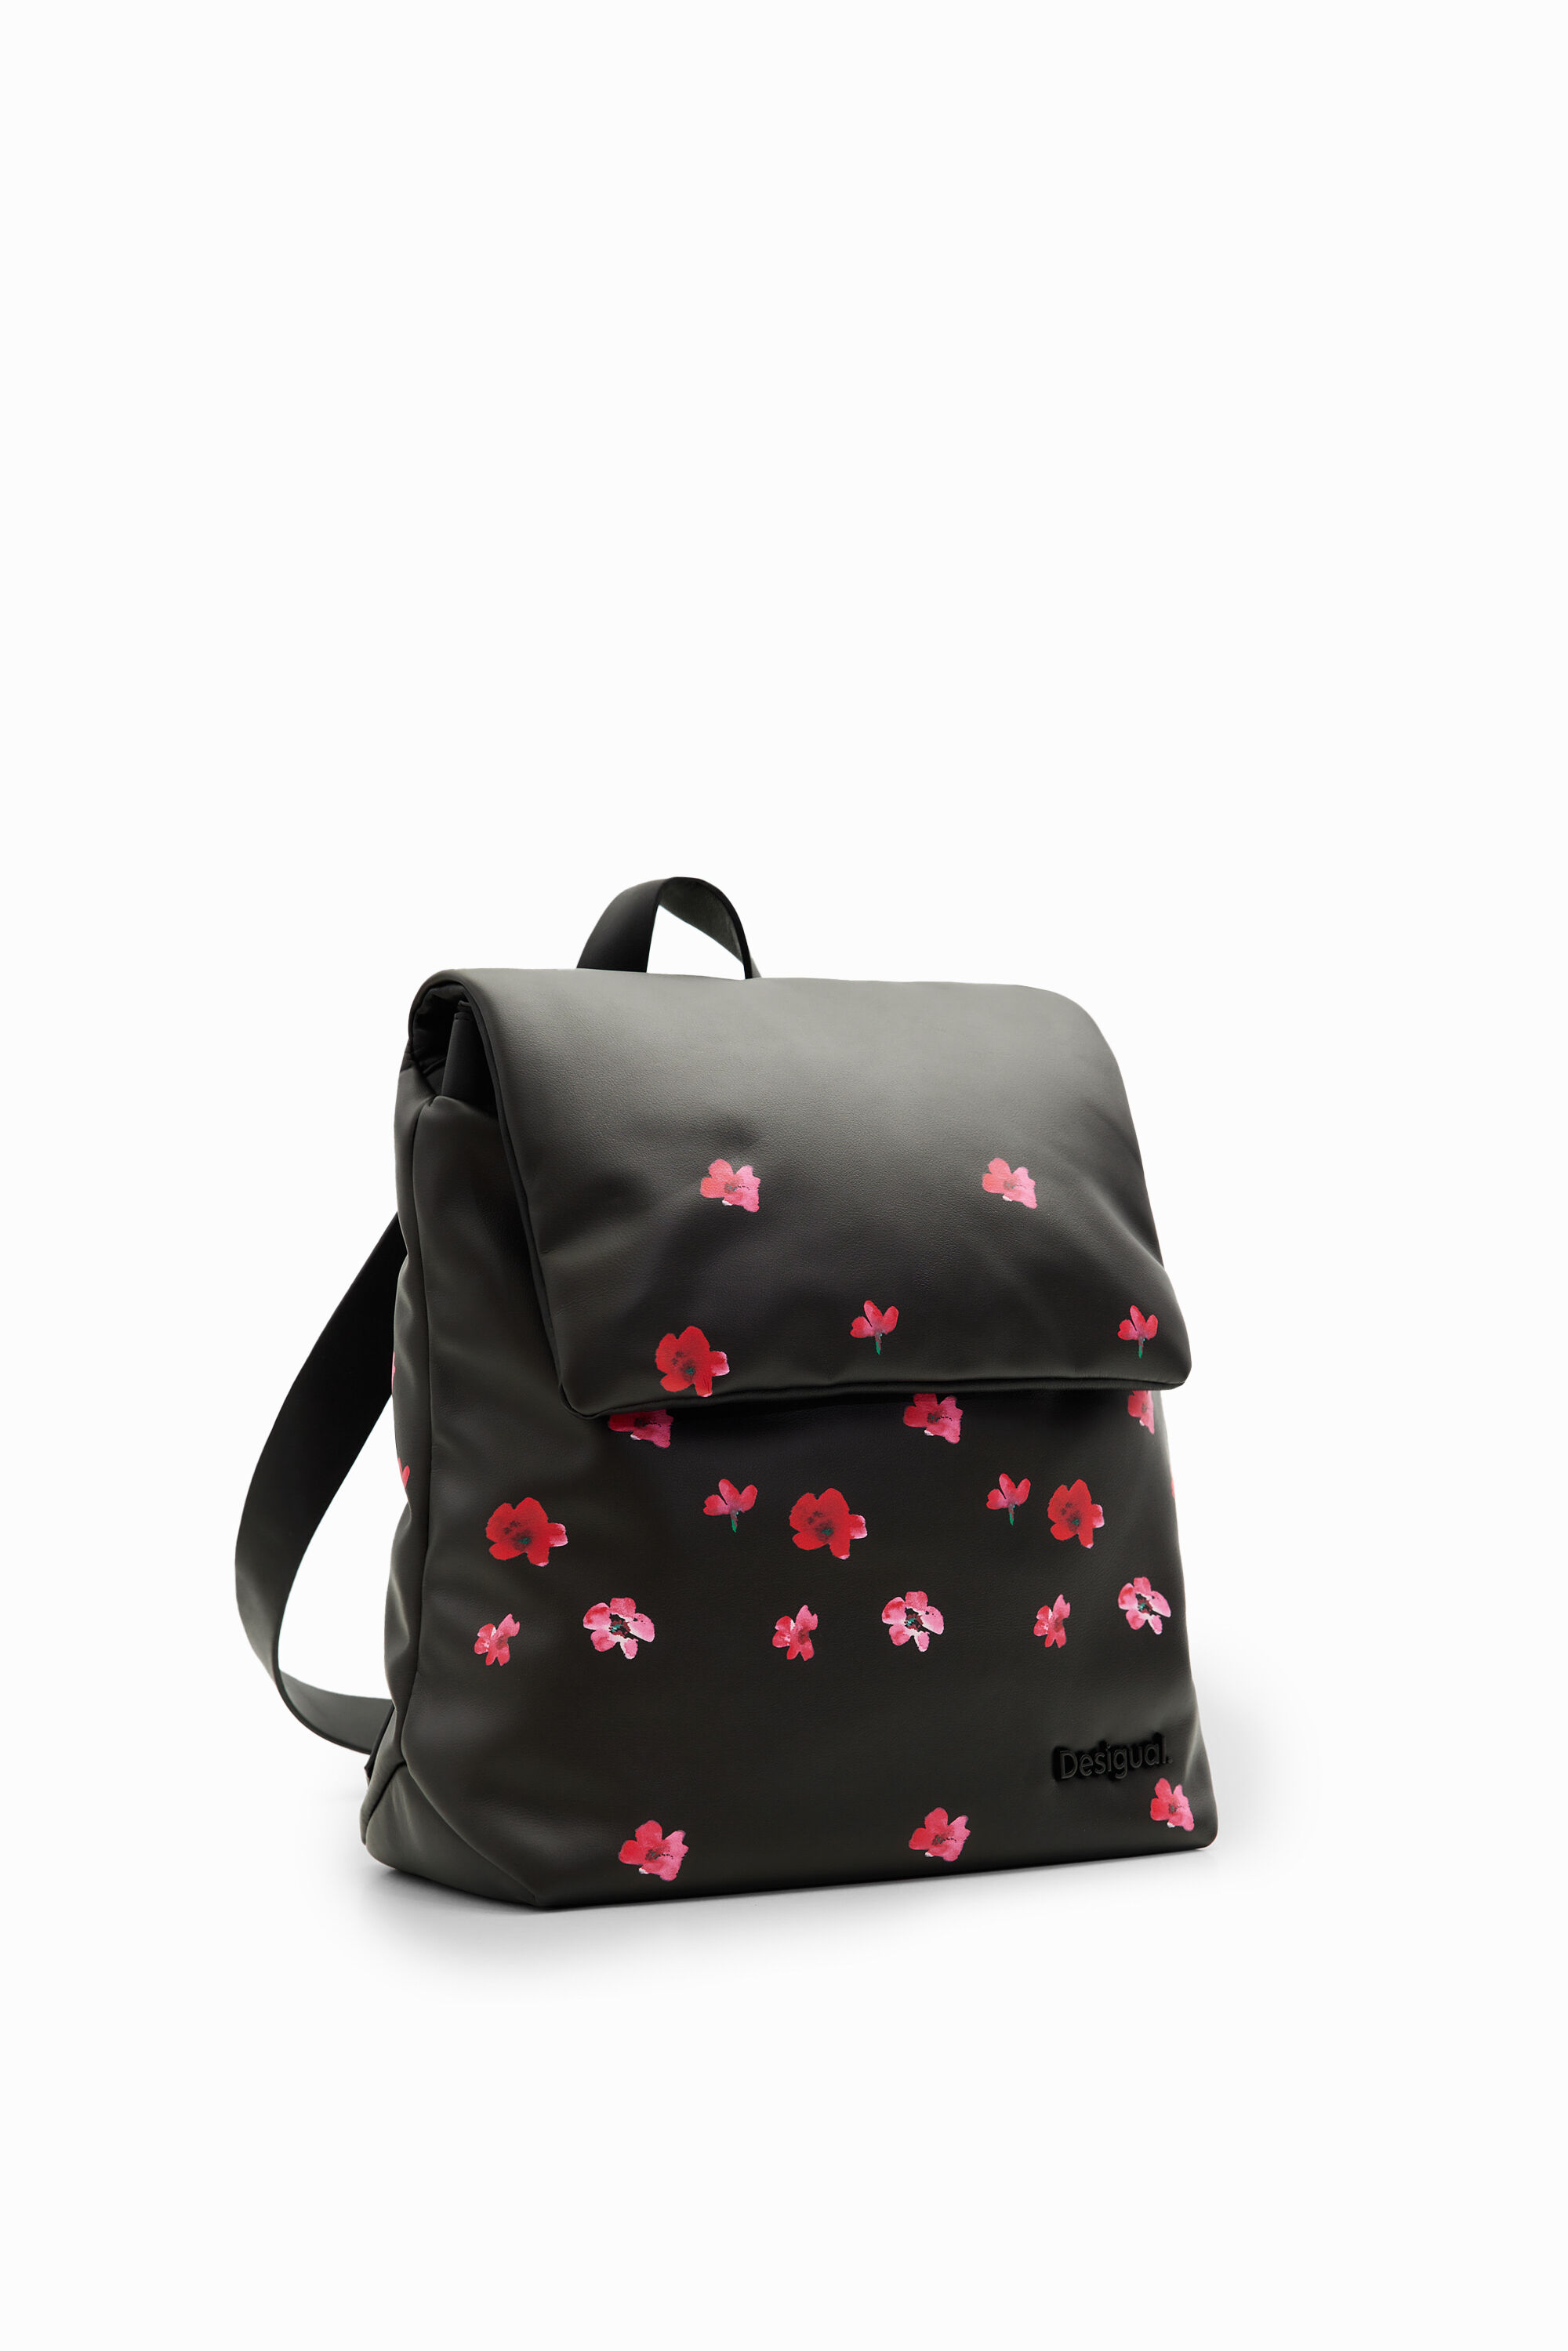 Desigual S Padded Floral Backpack In Black